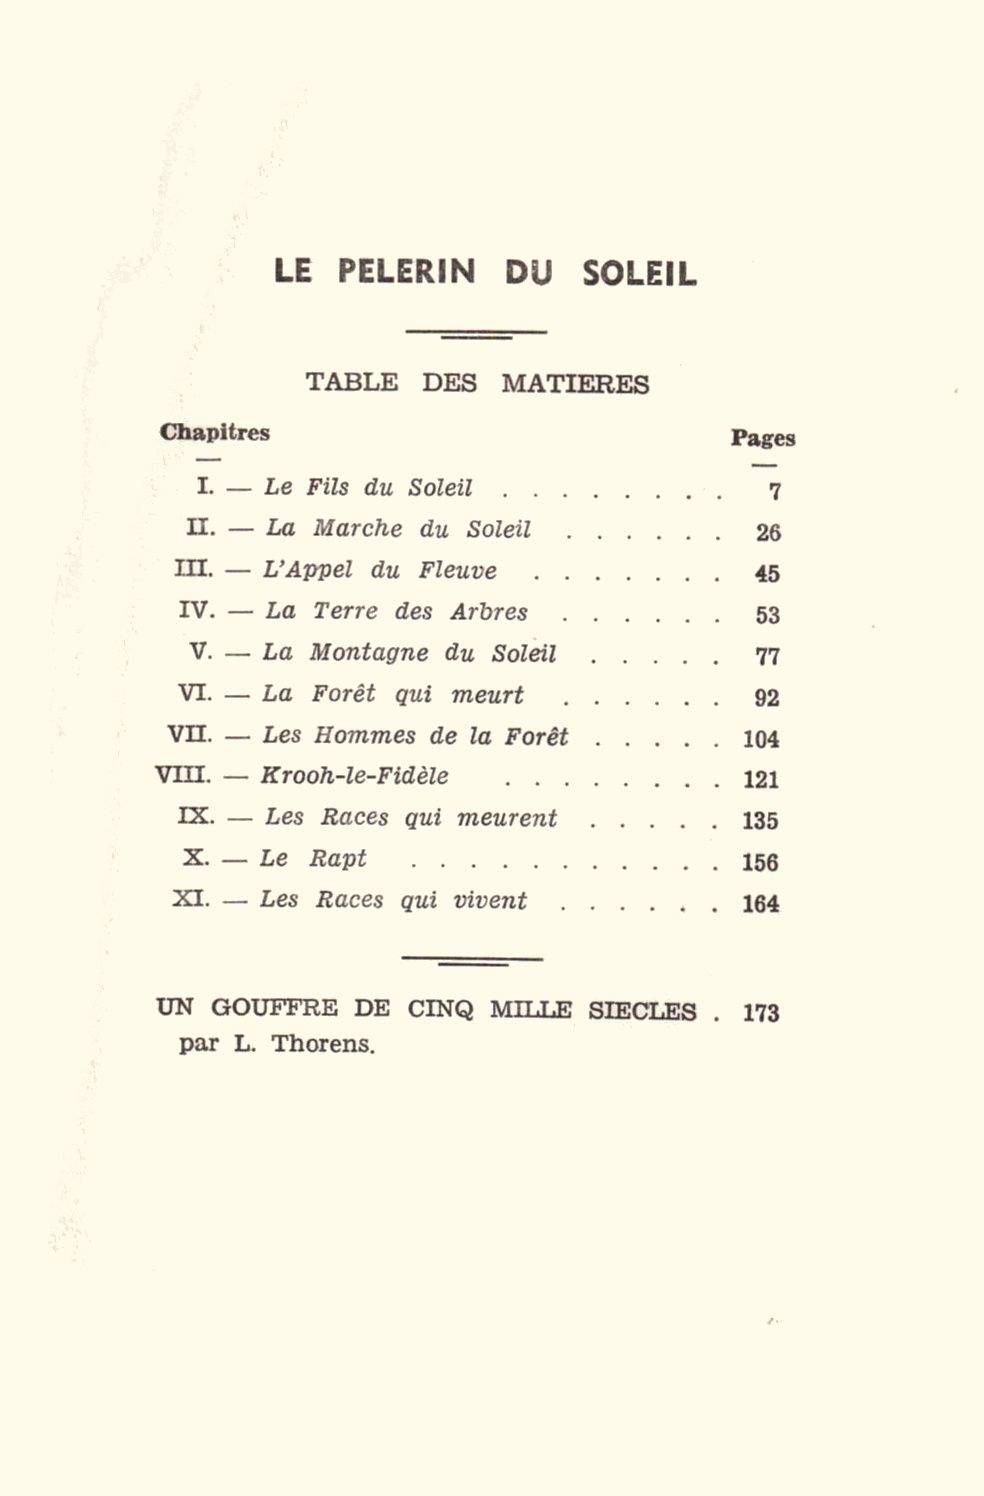 Pierre Goemaere "Le Pèlerin du Soleil" (Durendal - 1953)